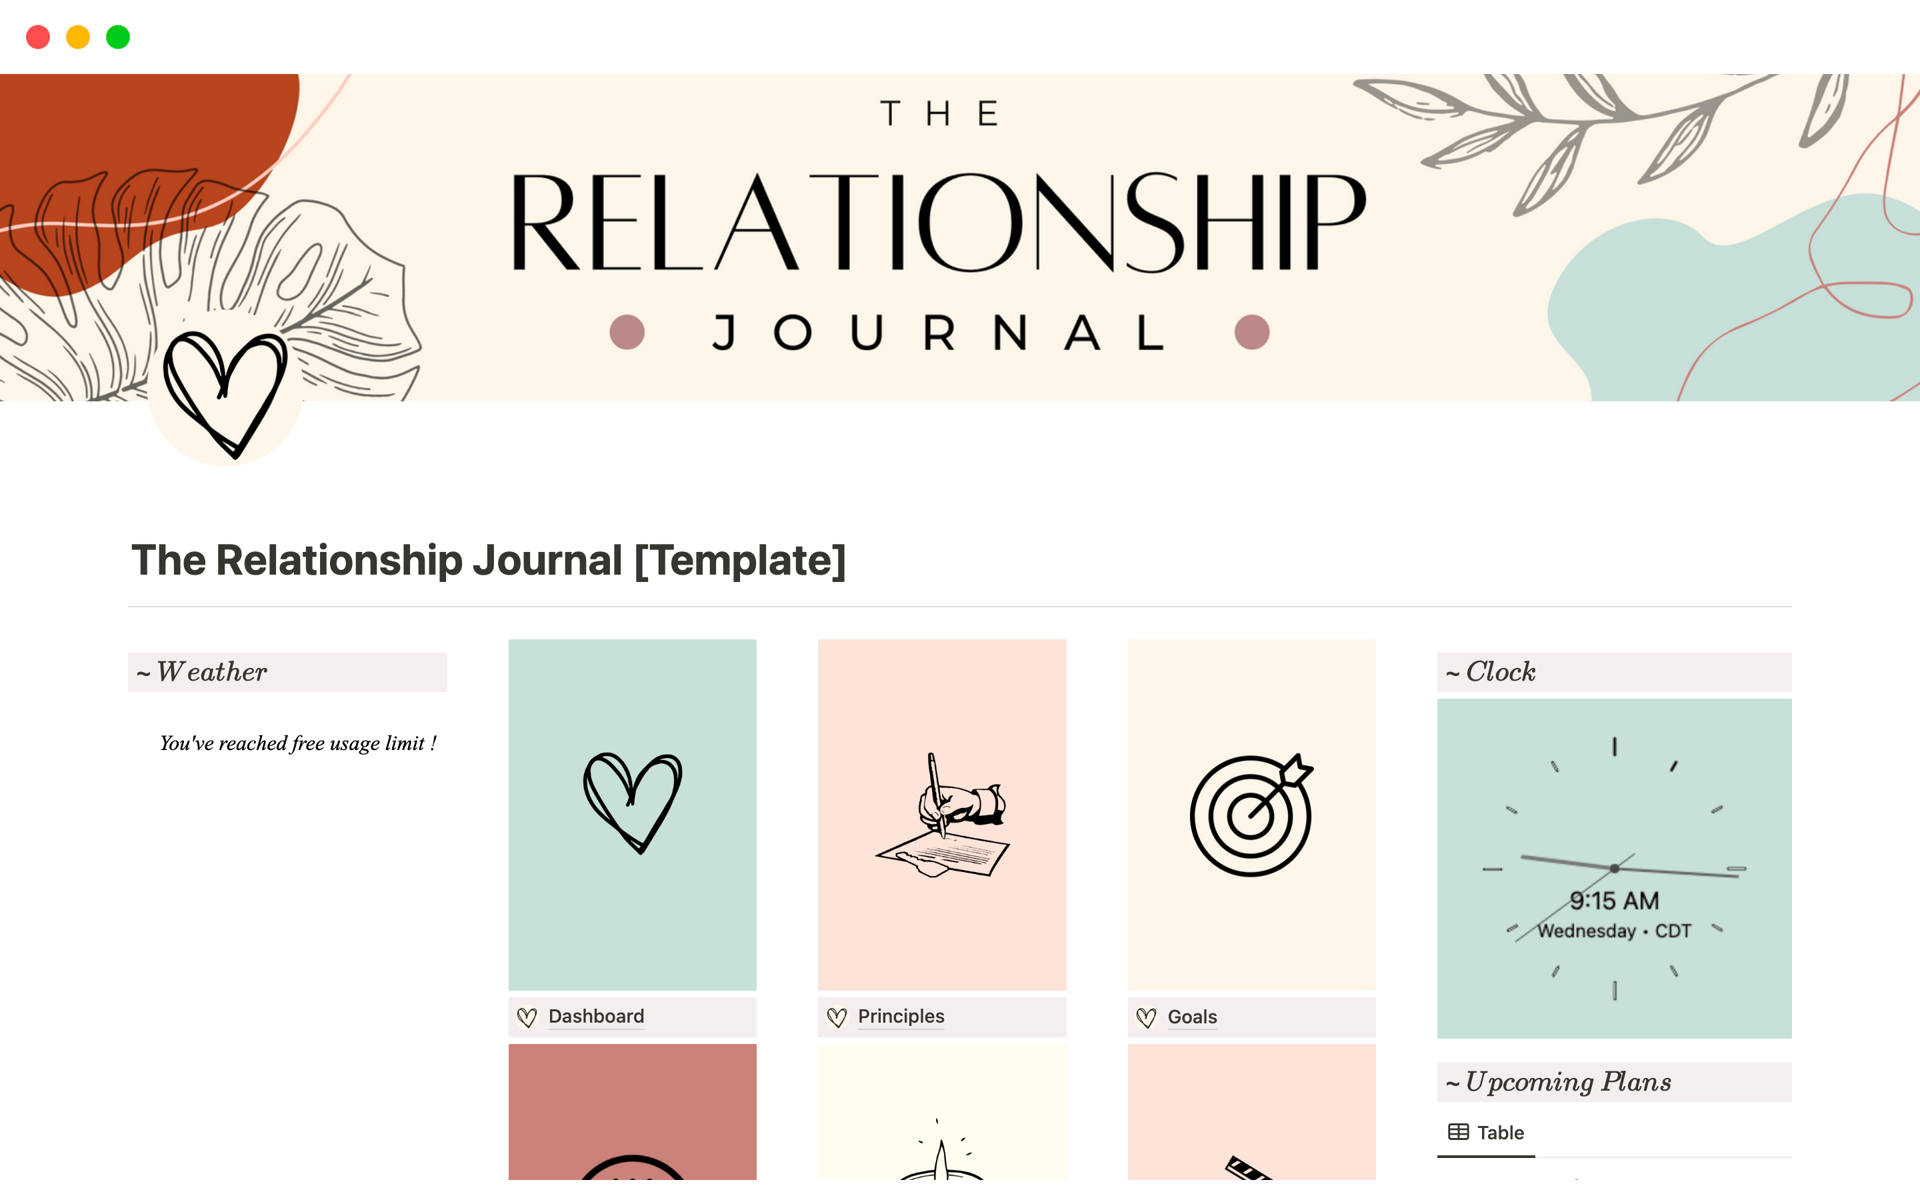 Vista previa de plantilla para The Relationship Journal